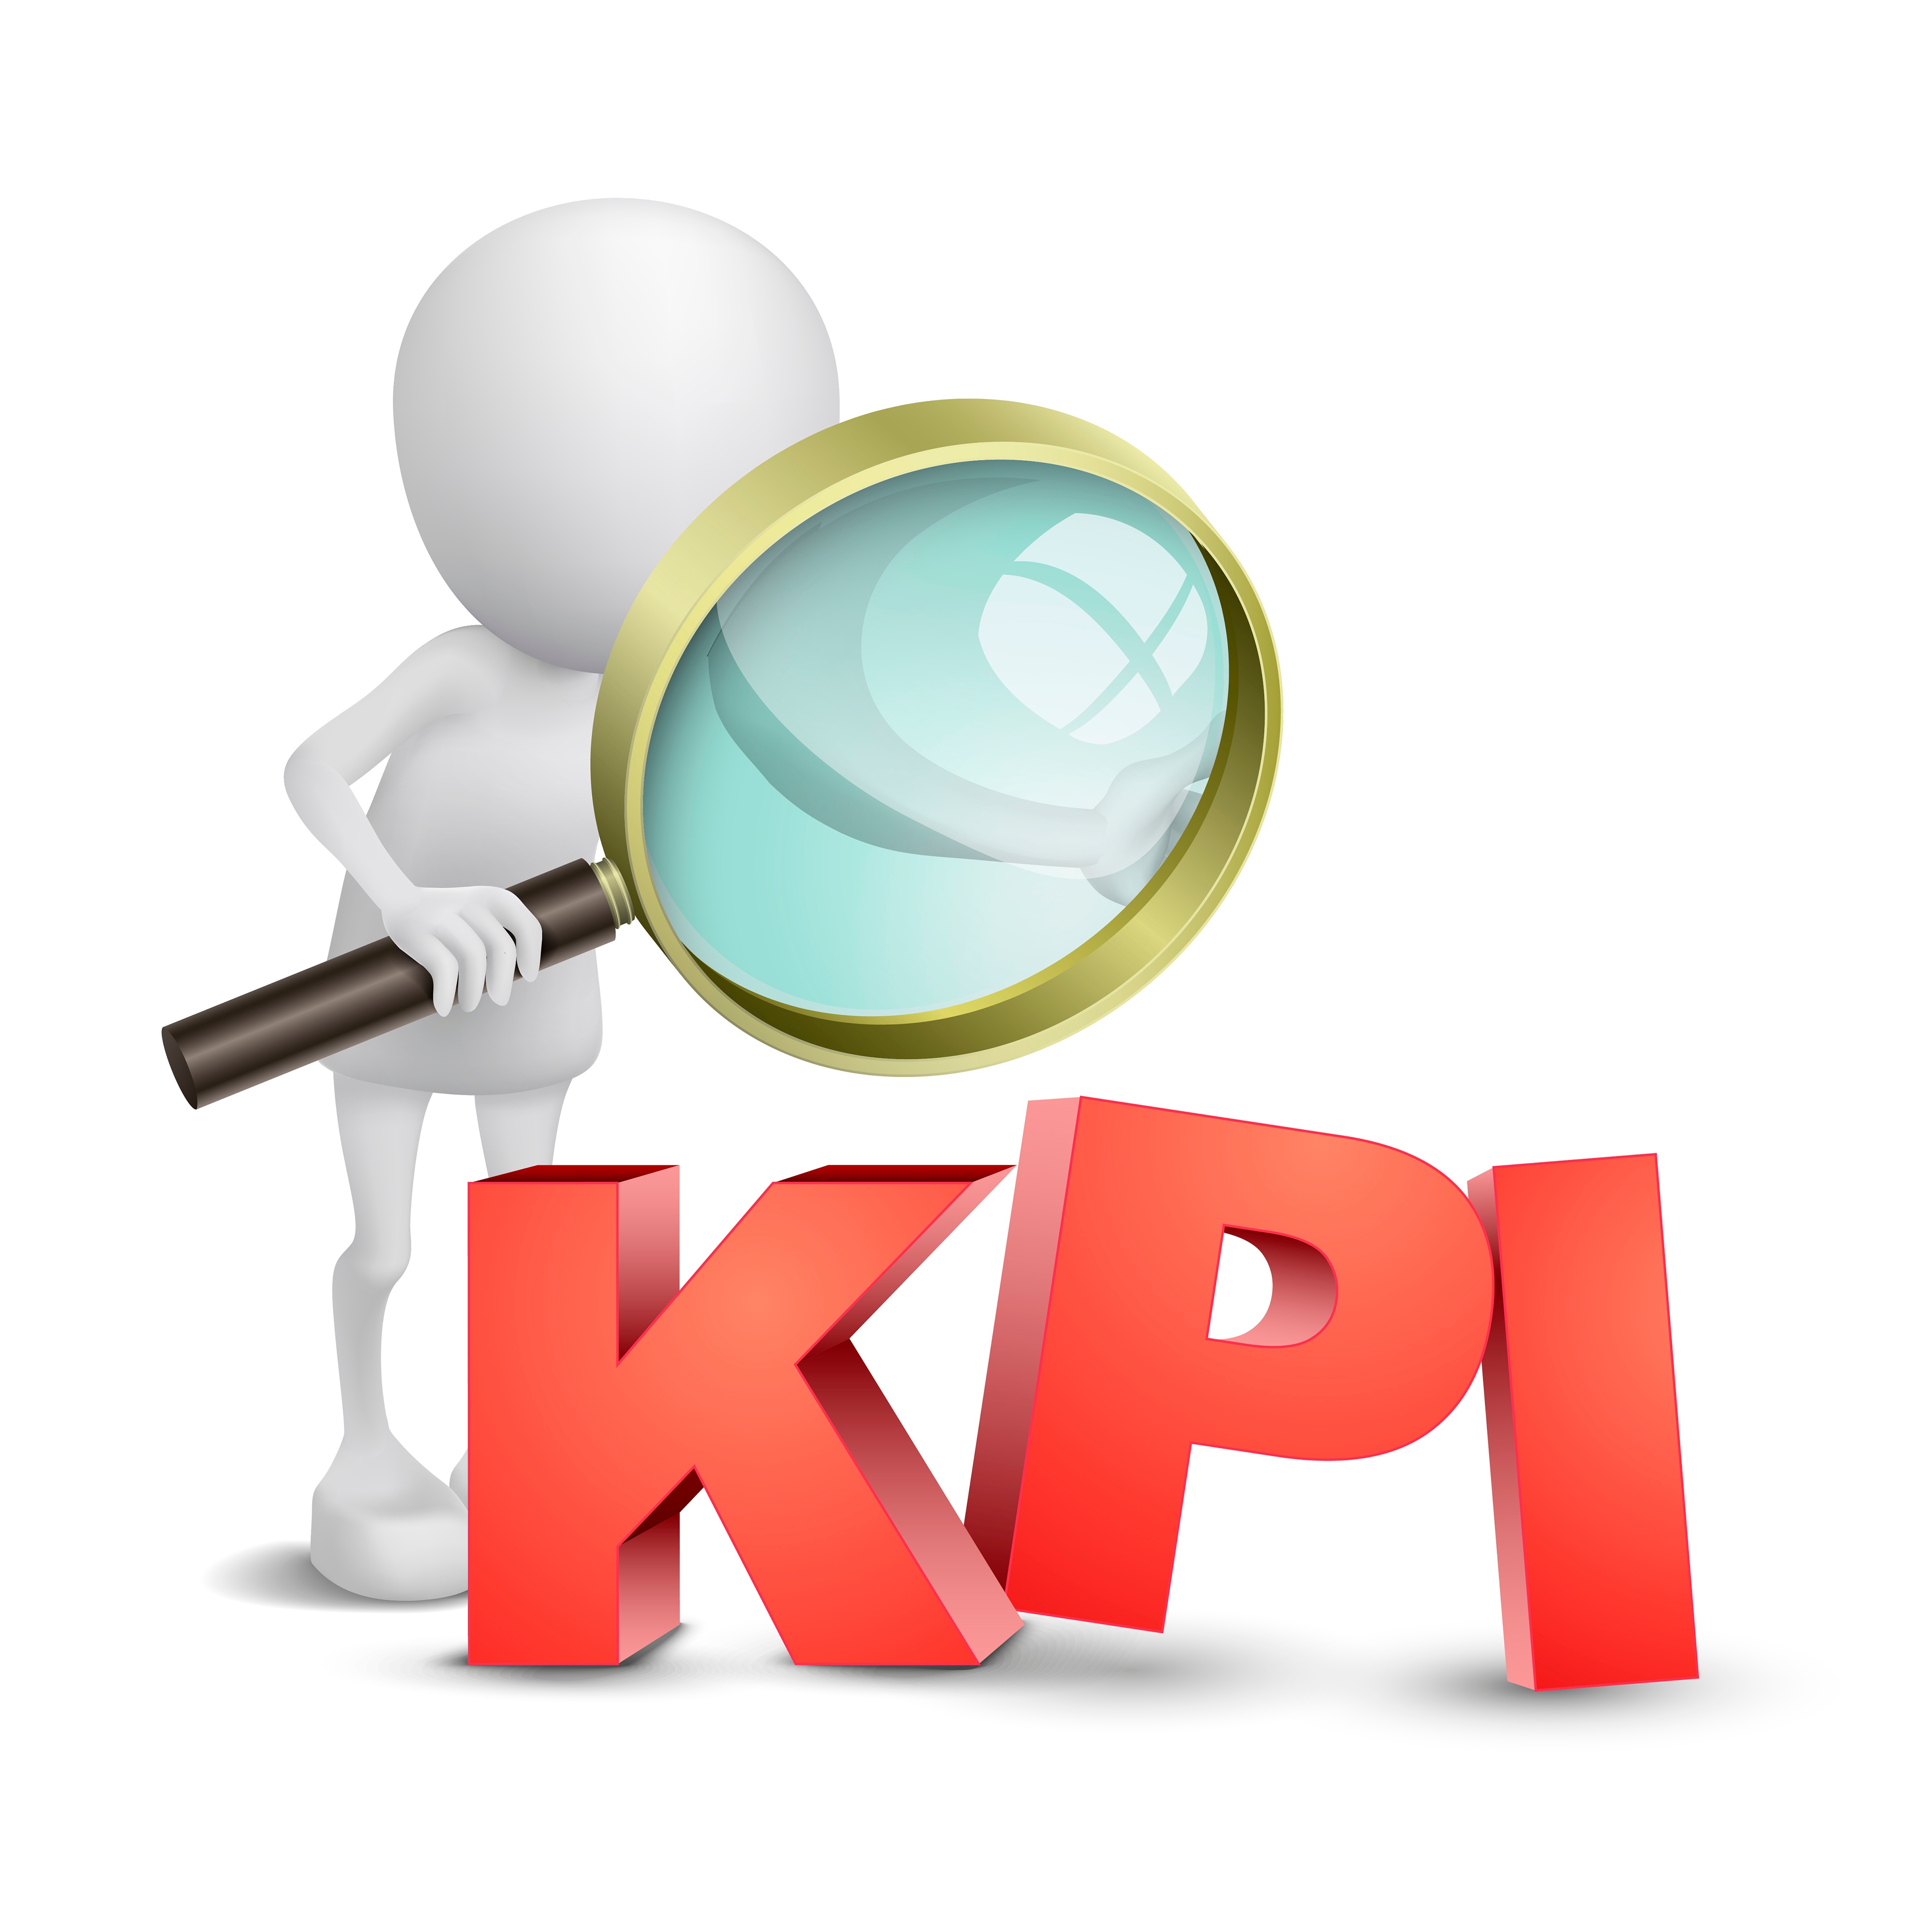 KPI-key-performance-indicators.jpg